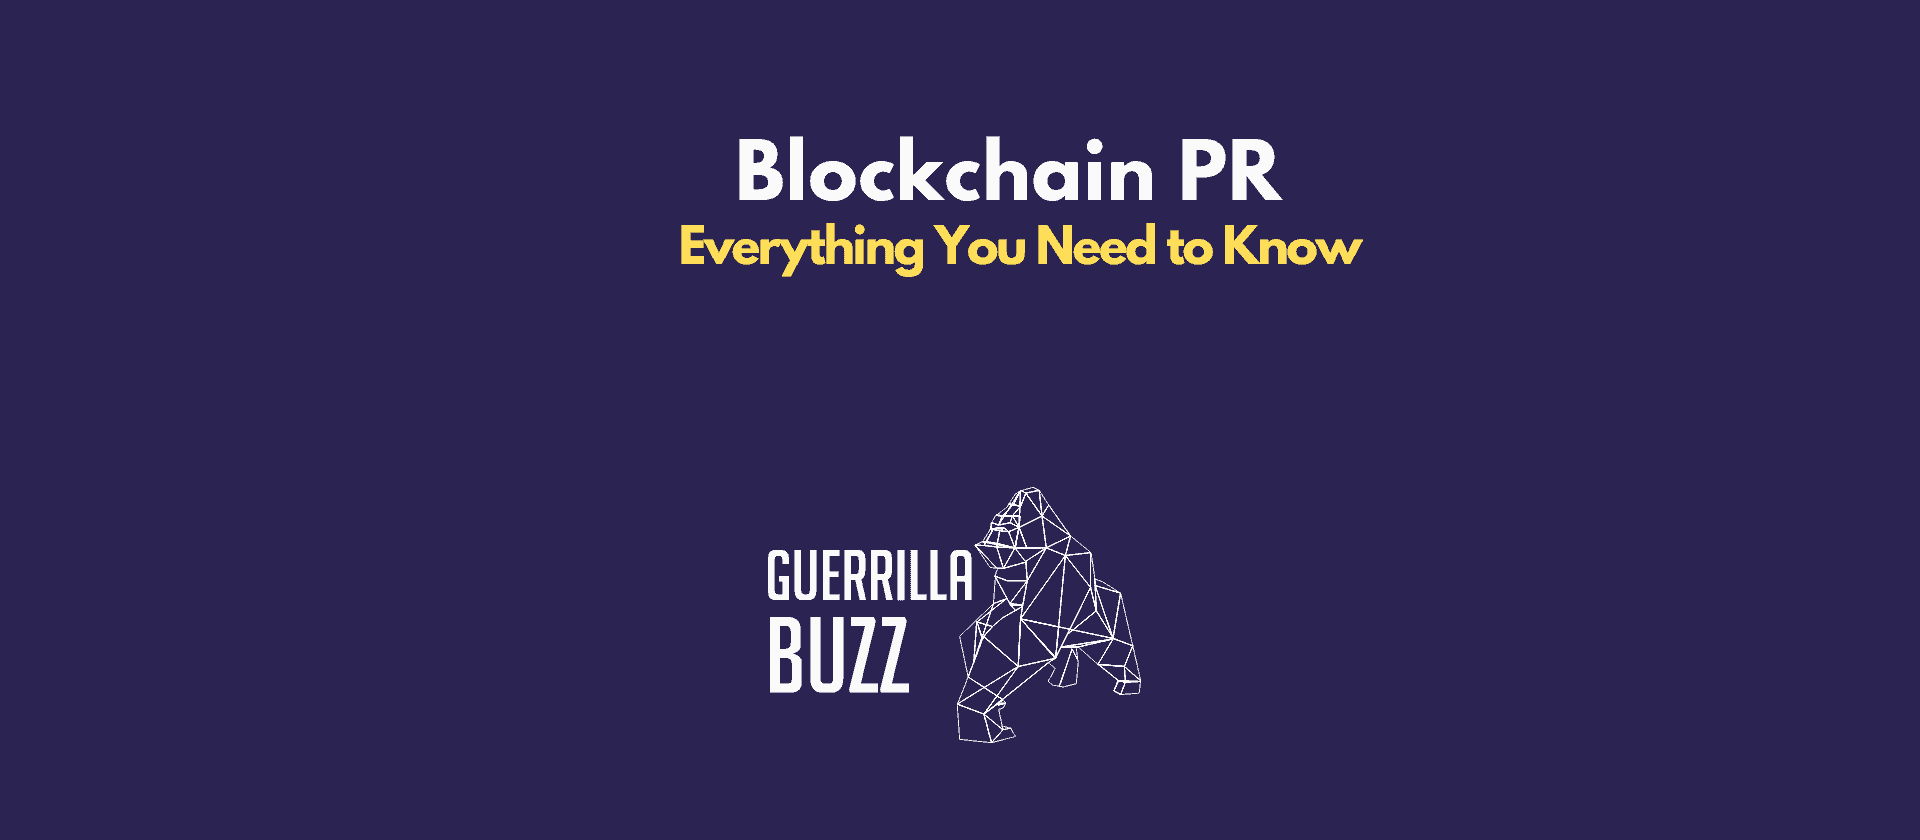 Blockchain PR GuerrillaBuzz E1631966303462